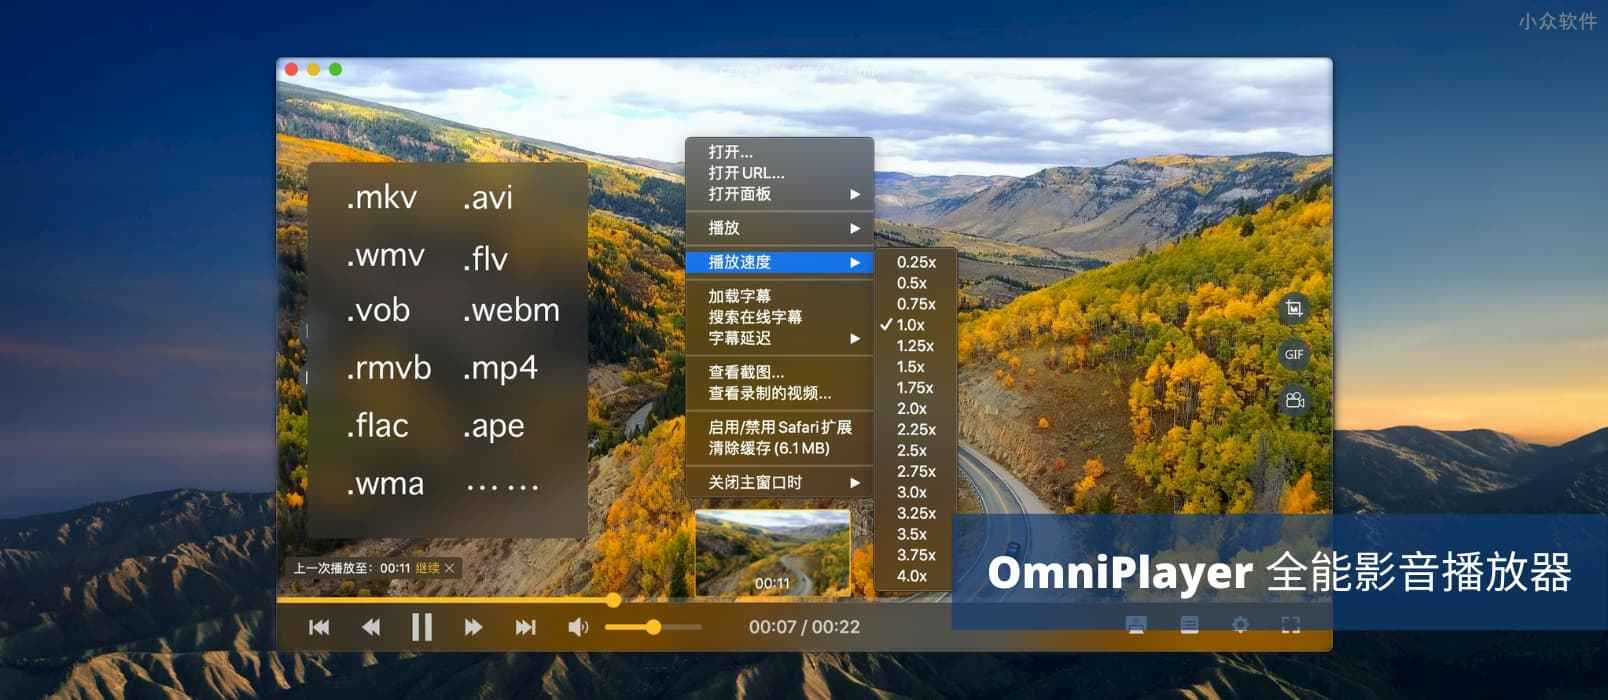 OmniPlayer – 支持投屏、自动搜索字幕，评分高达 4.8 分的全能视频播放器[macOS]